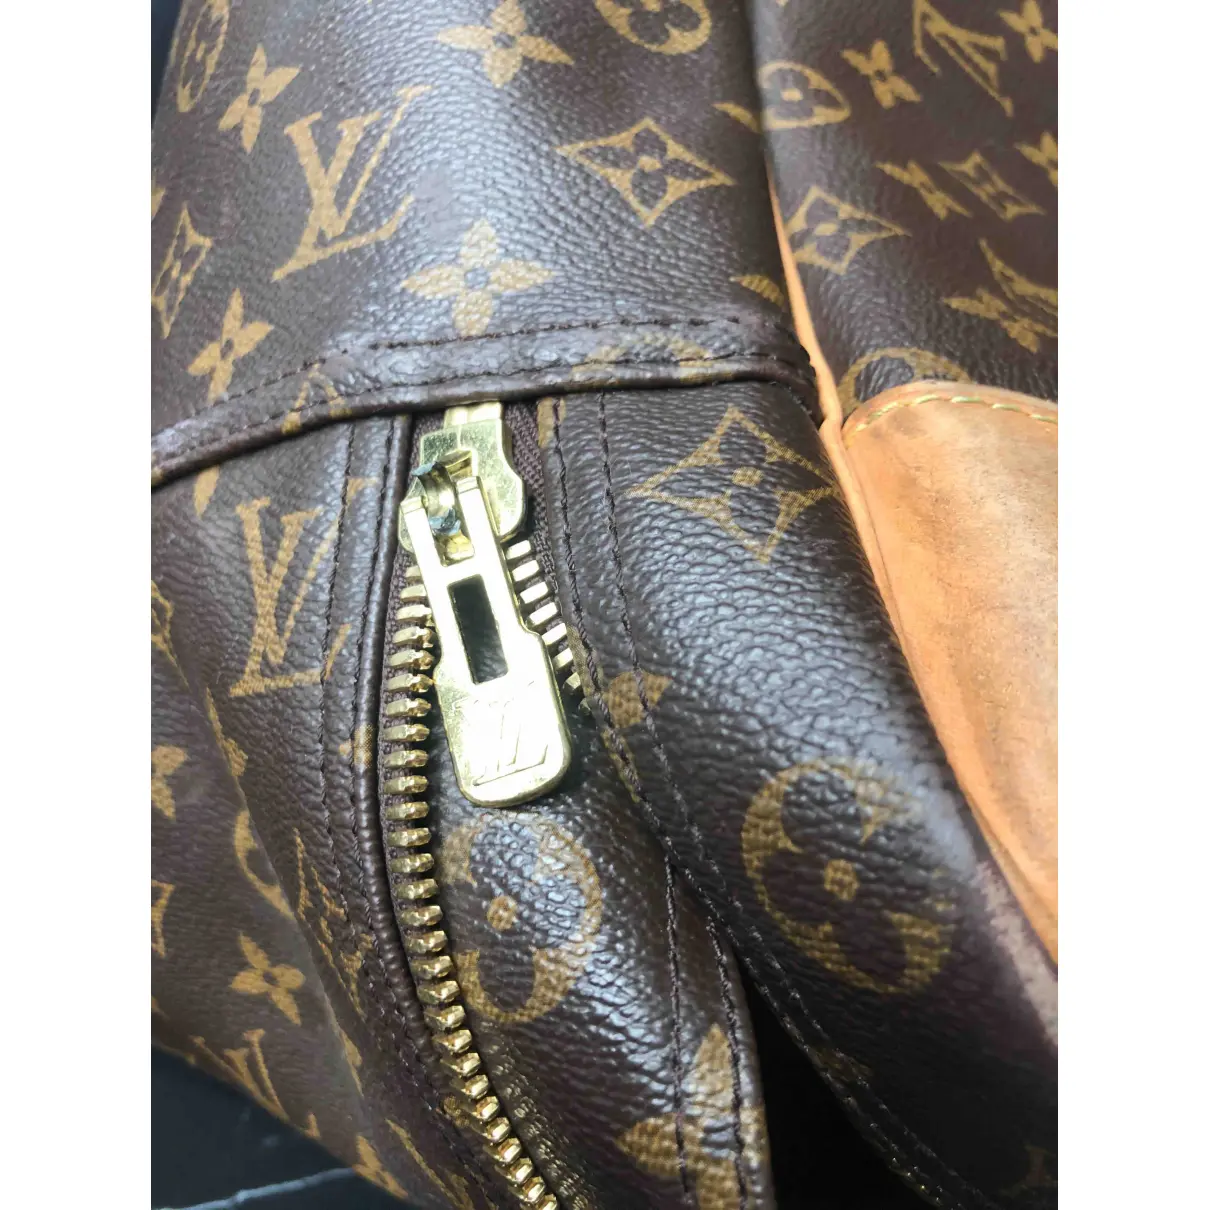 Buy Louis Vuitton Sirius leather travel bag online